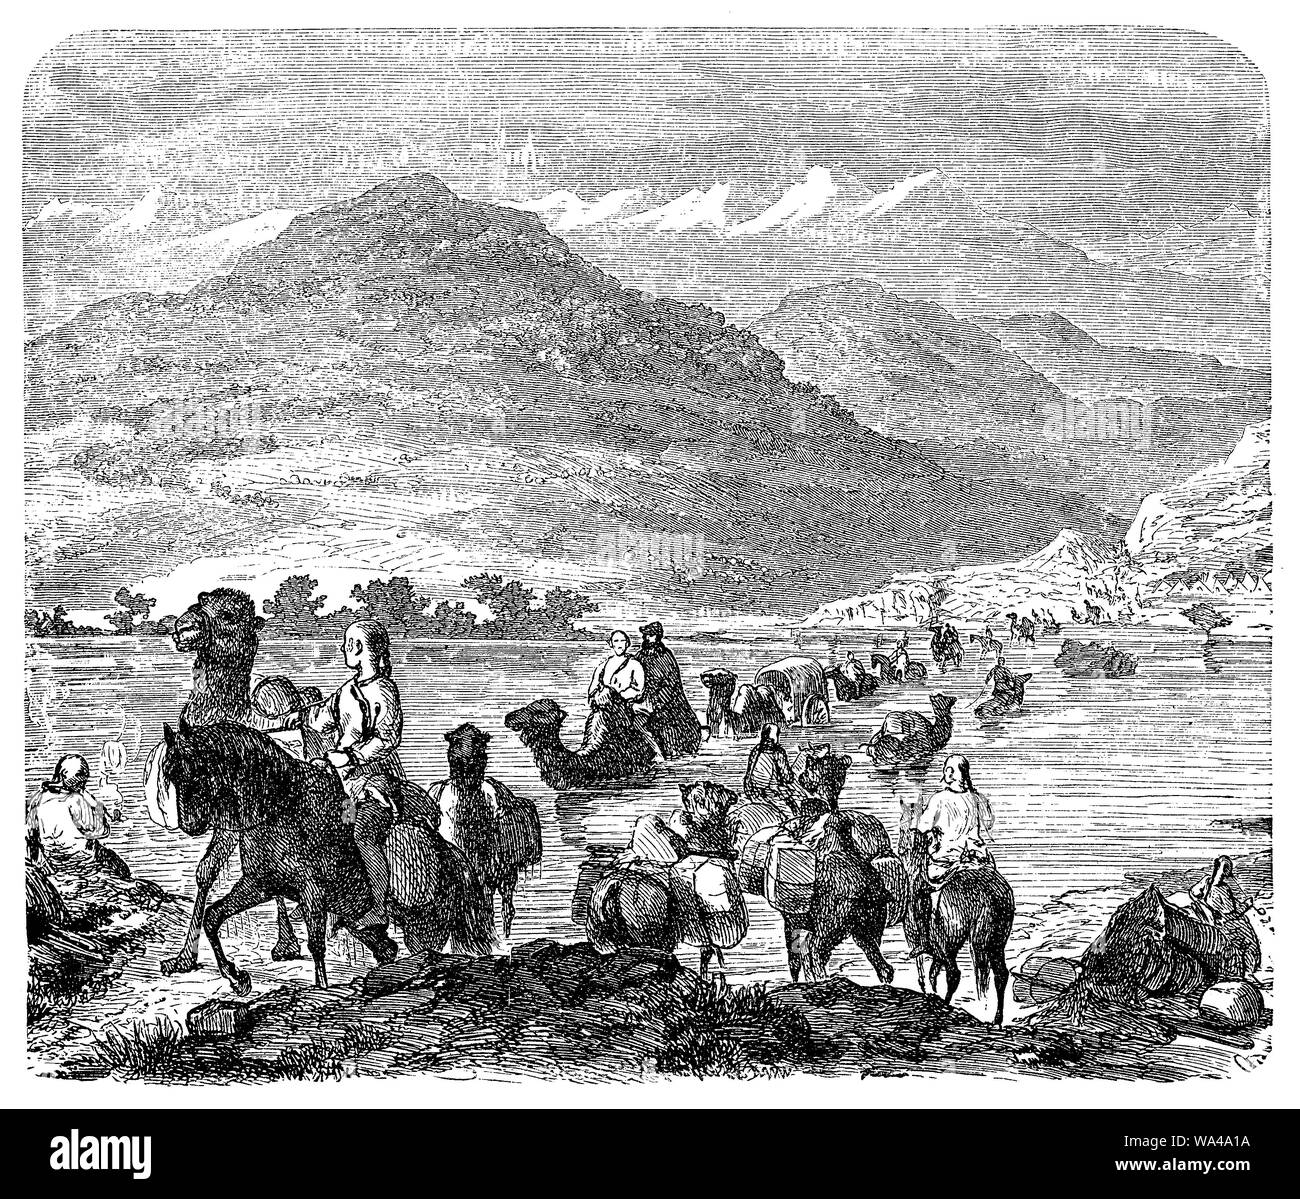 Caravana de camellos atravesando un río en Mongolia Foto de stock